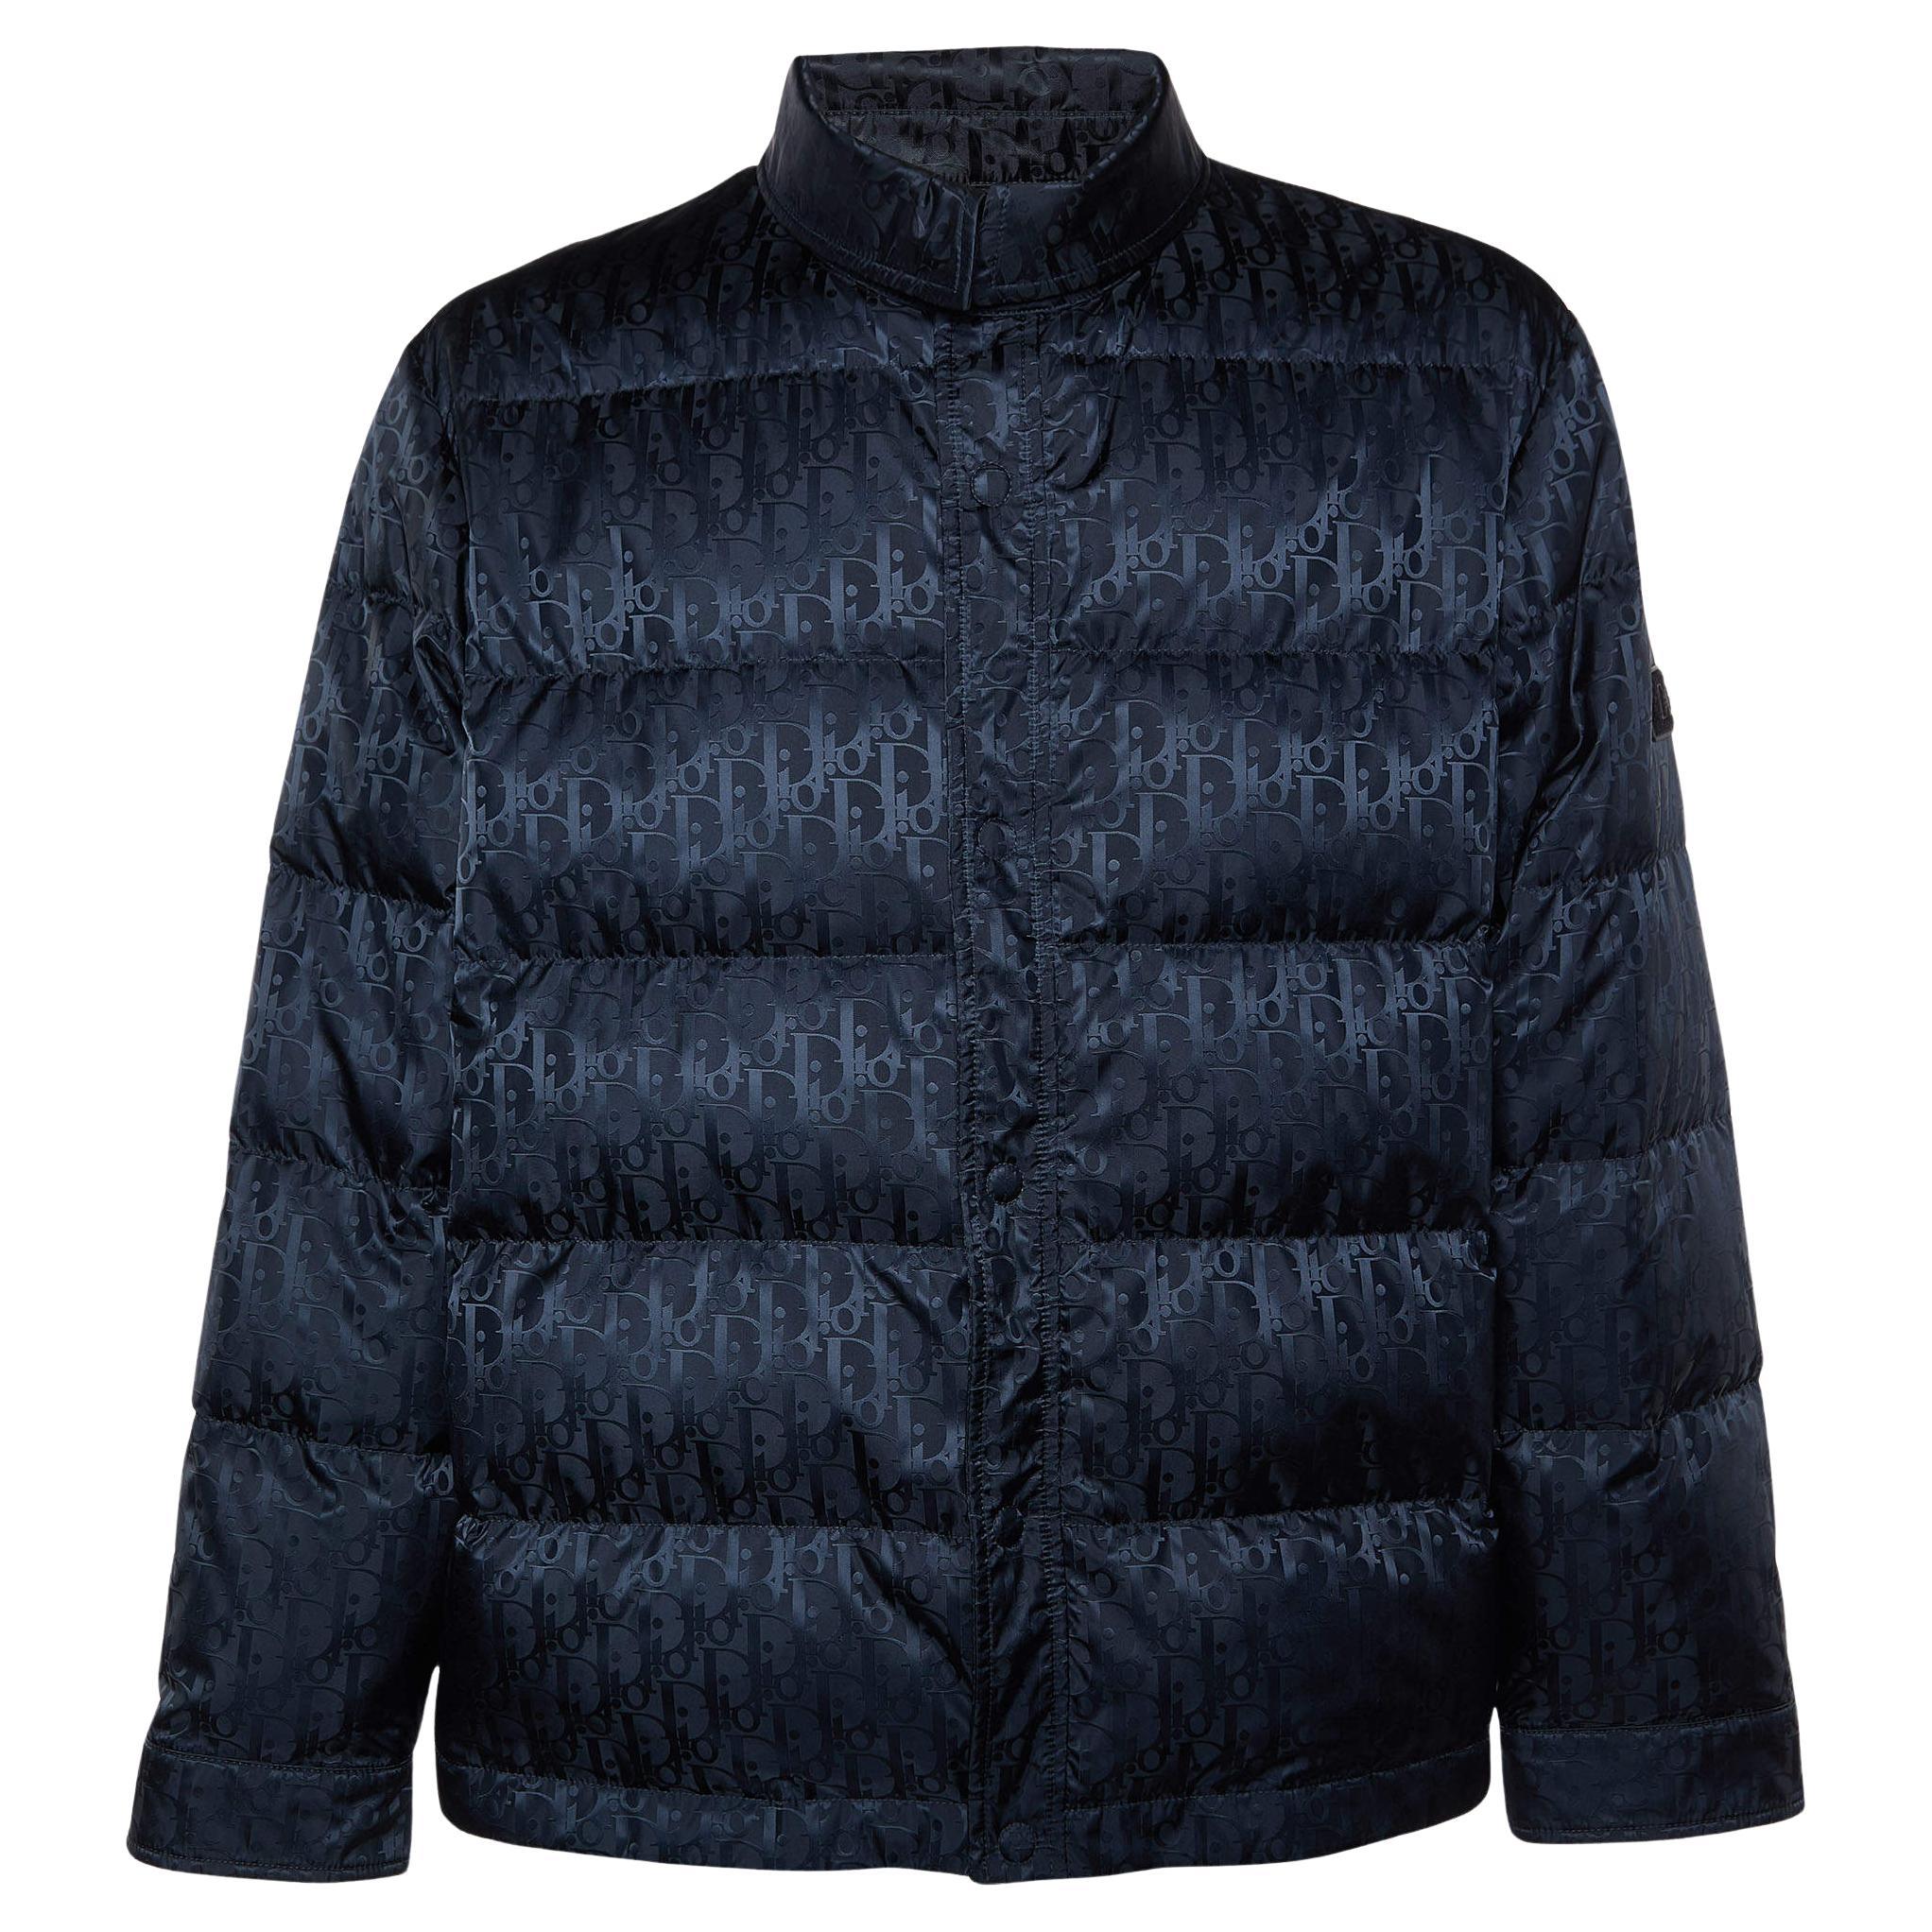 Dior Homme Black Oblique Technical Jacquard Quilted Jacket XXL